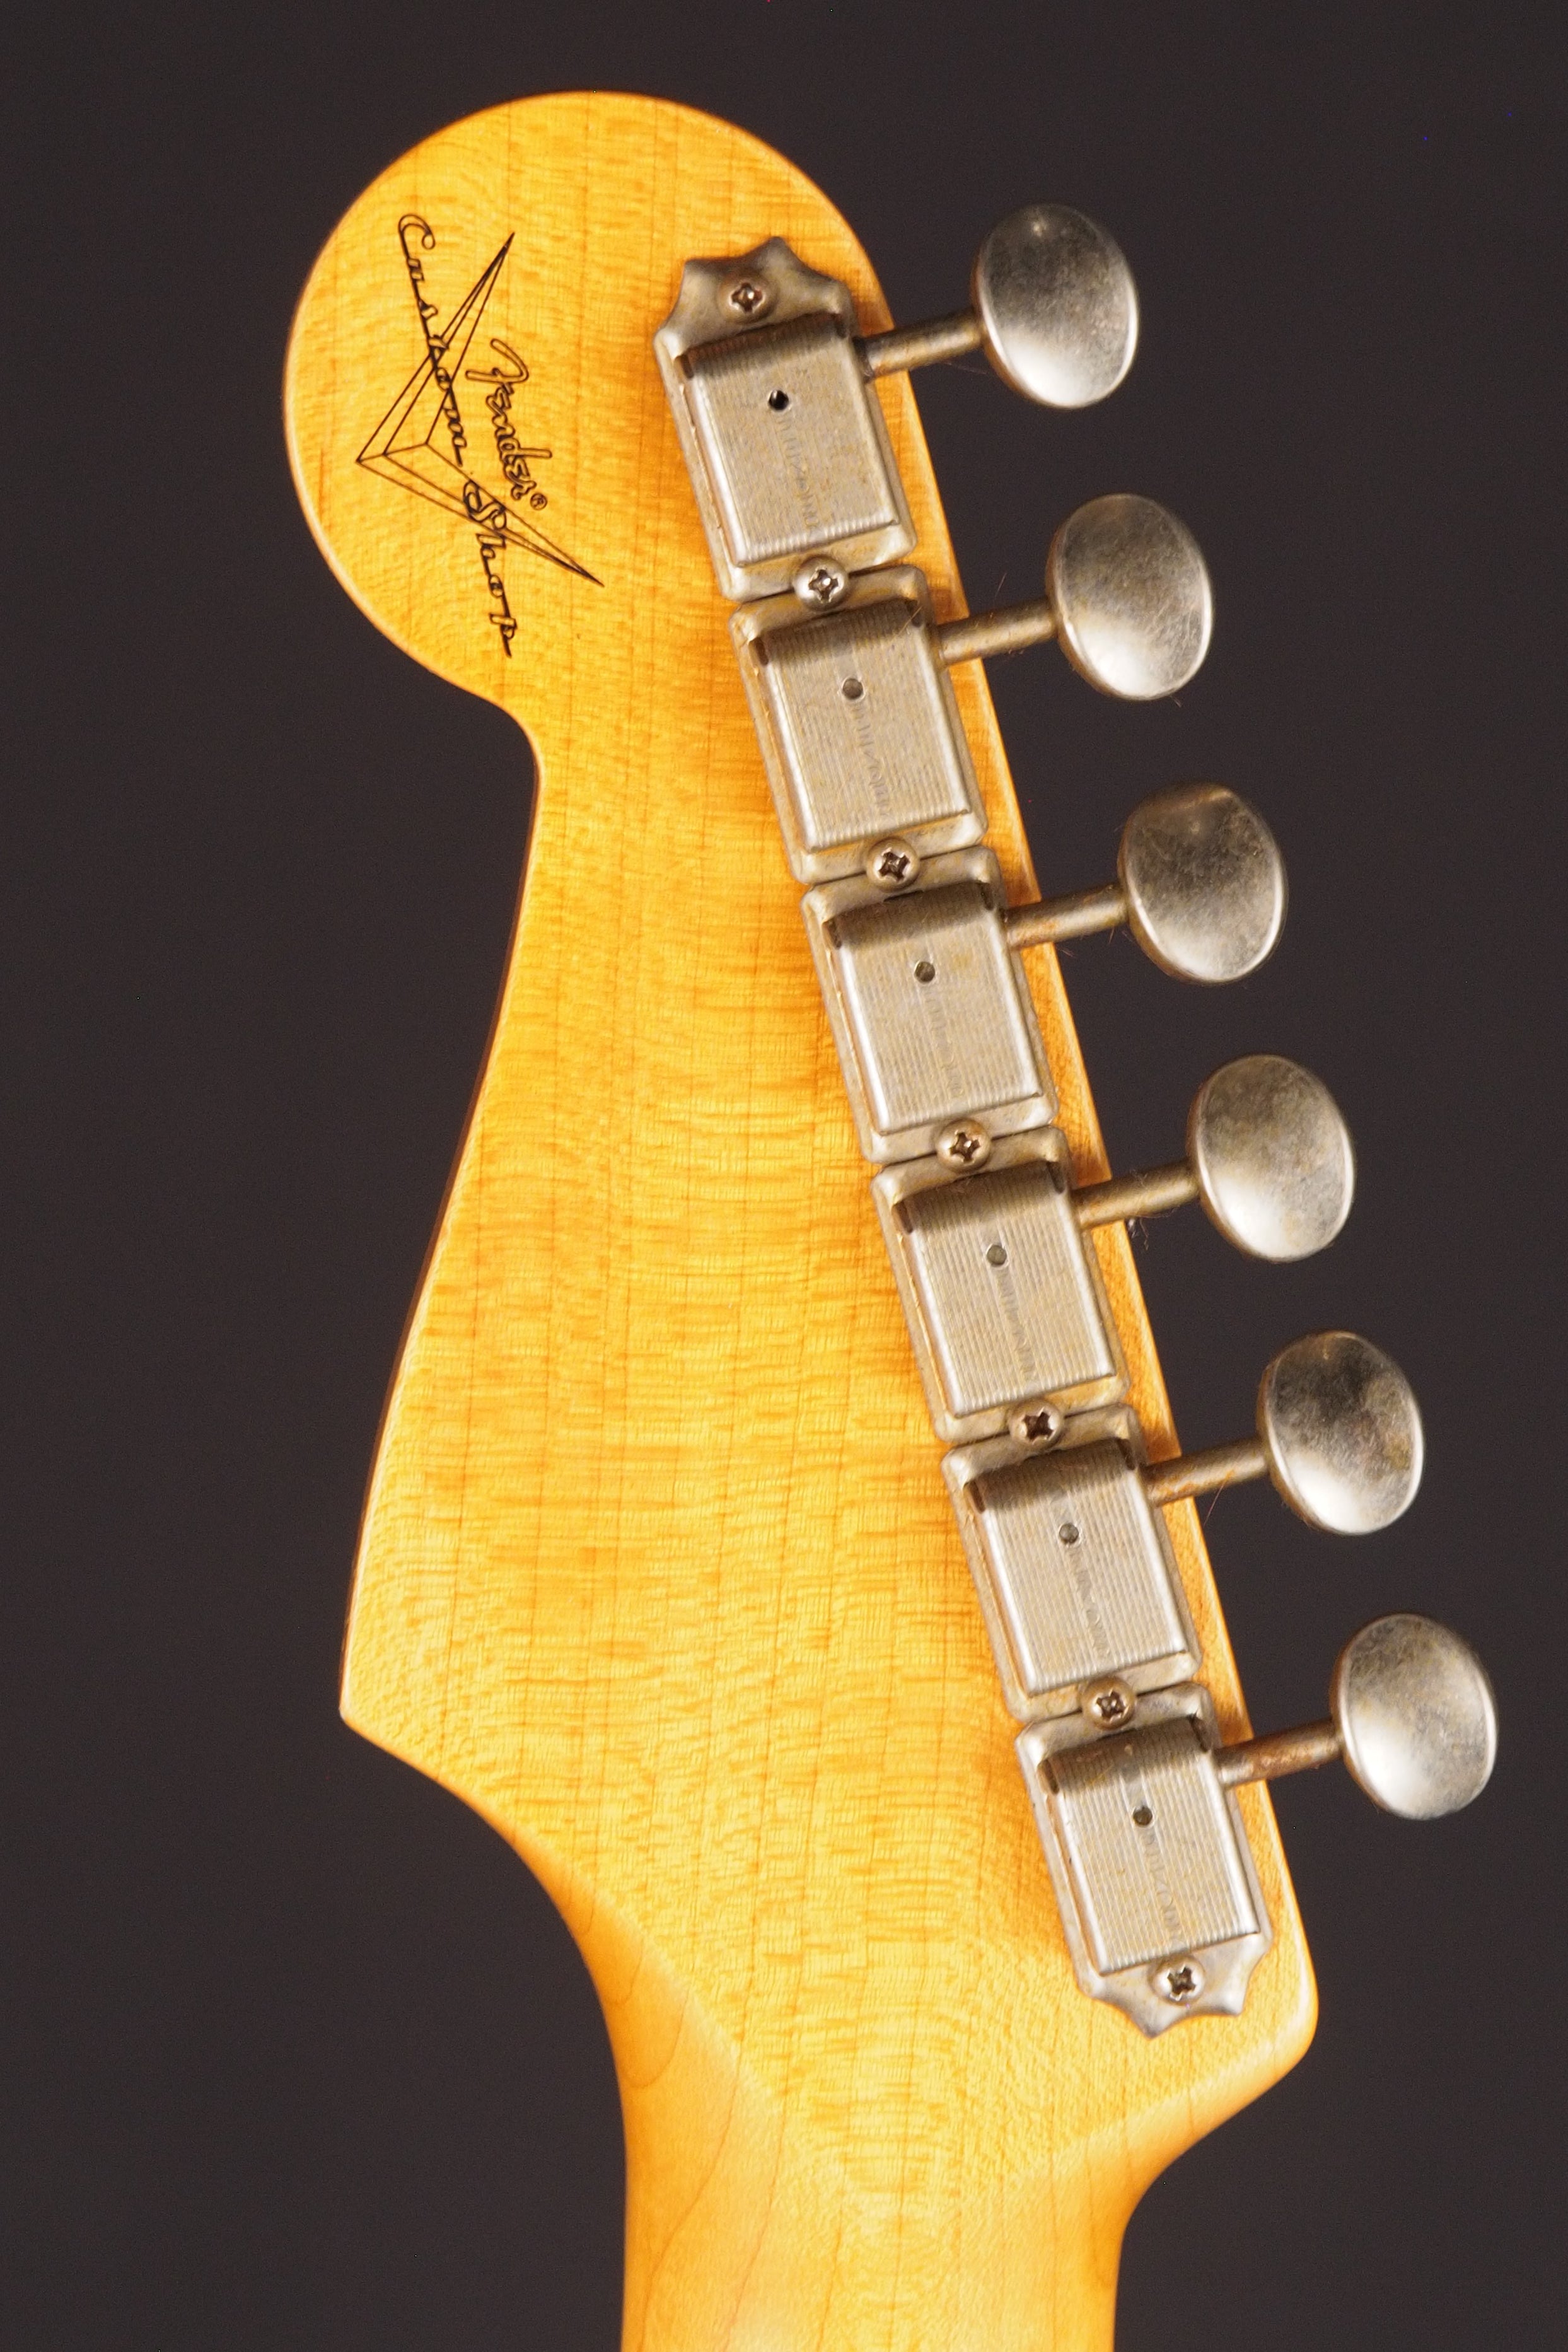 '64 Journeyman Relic Stratocaster  - Fiesta Red